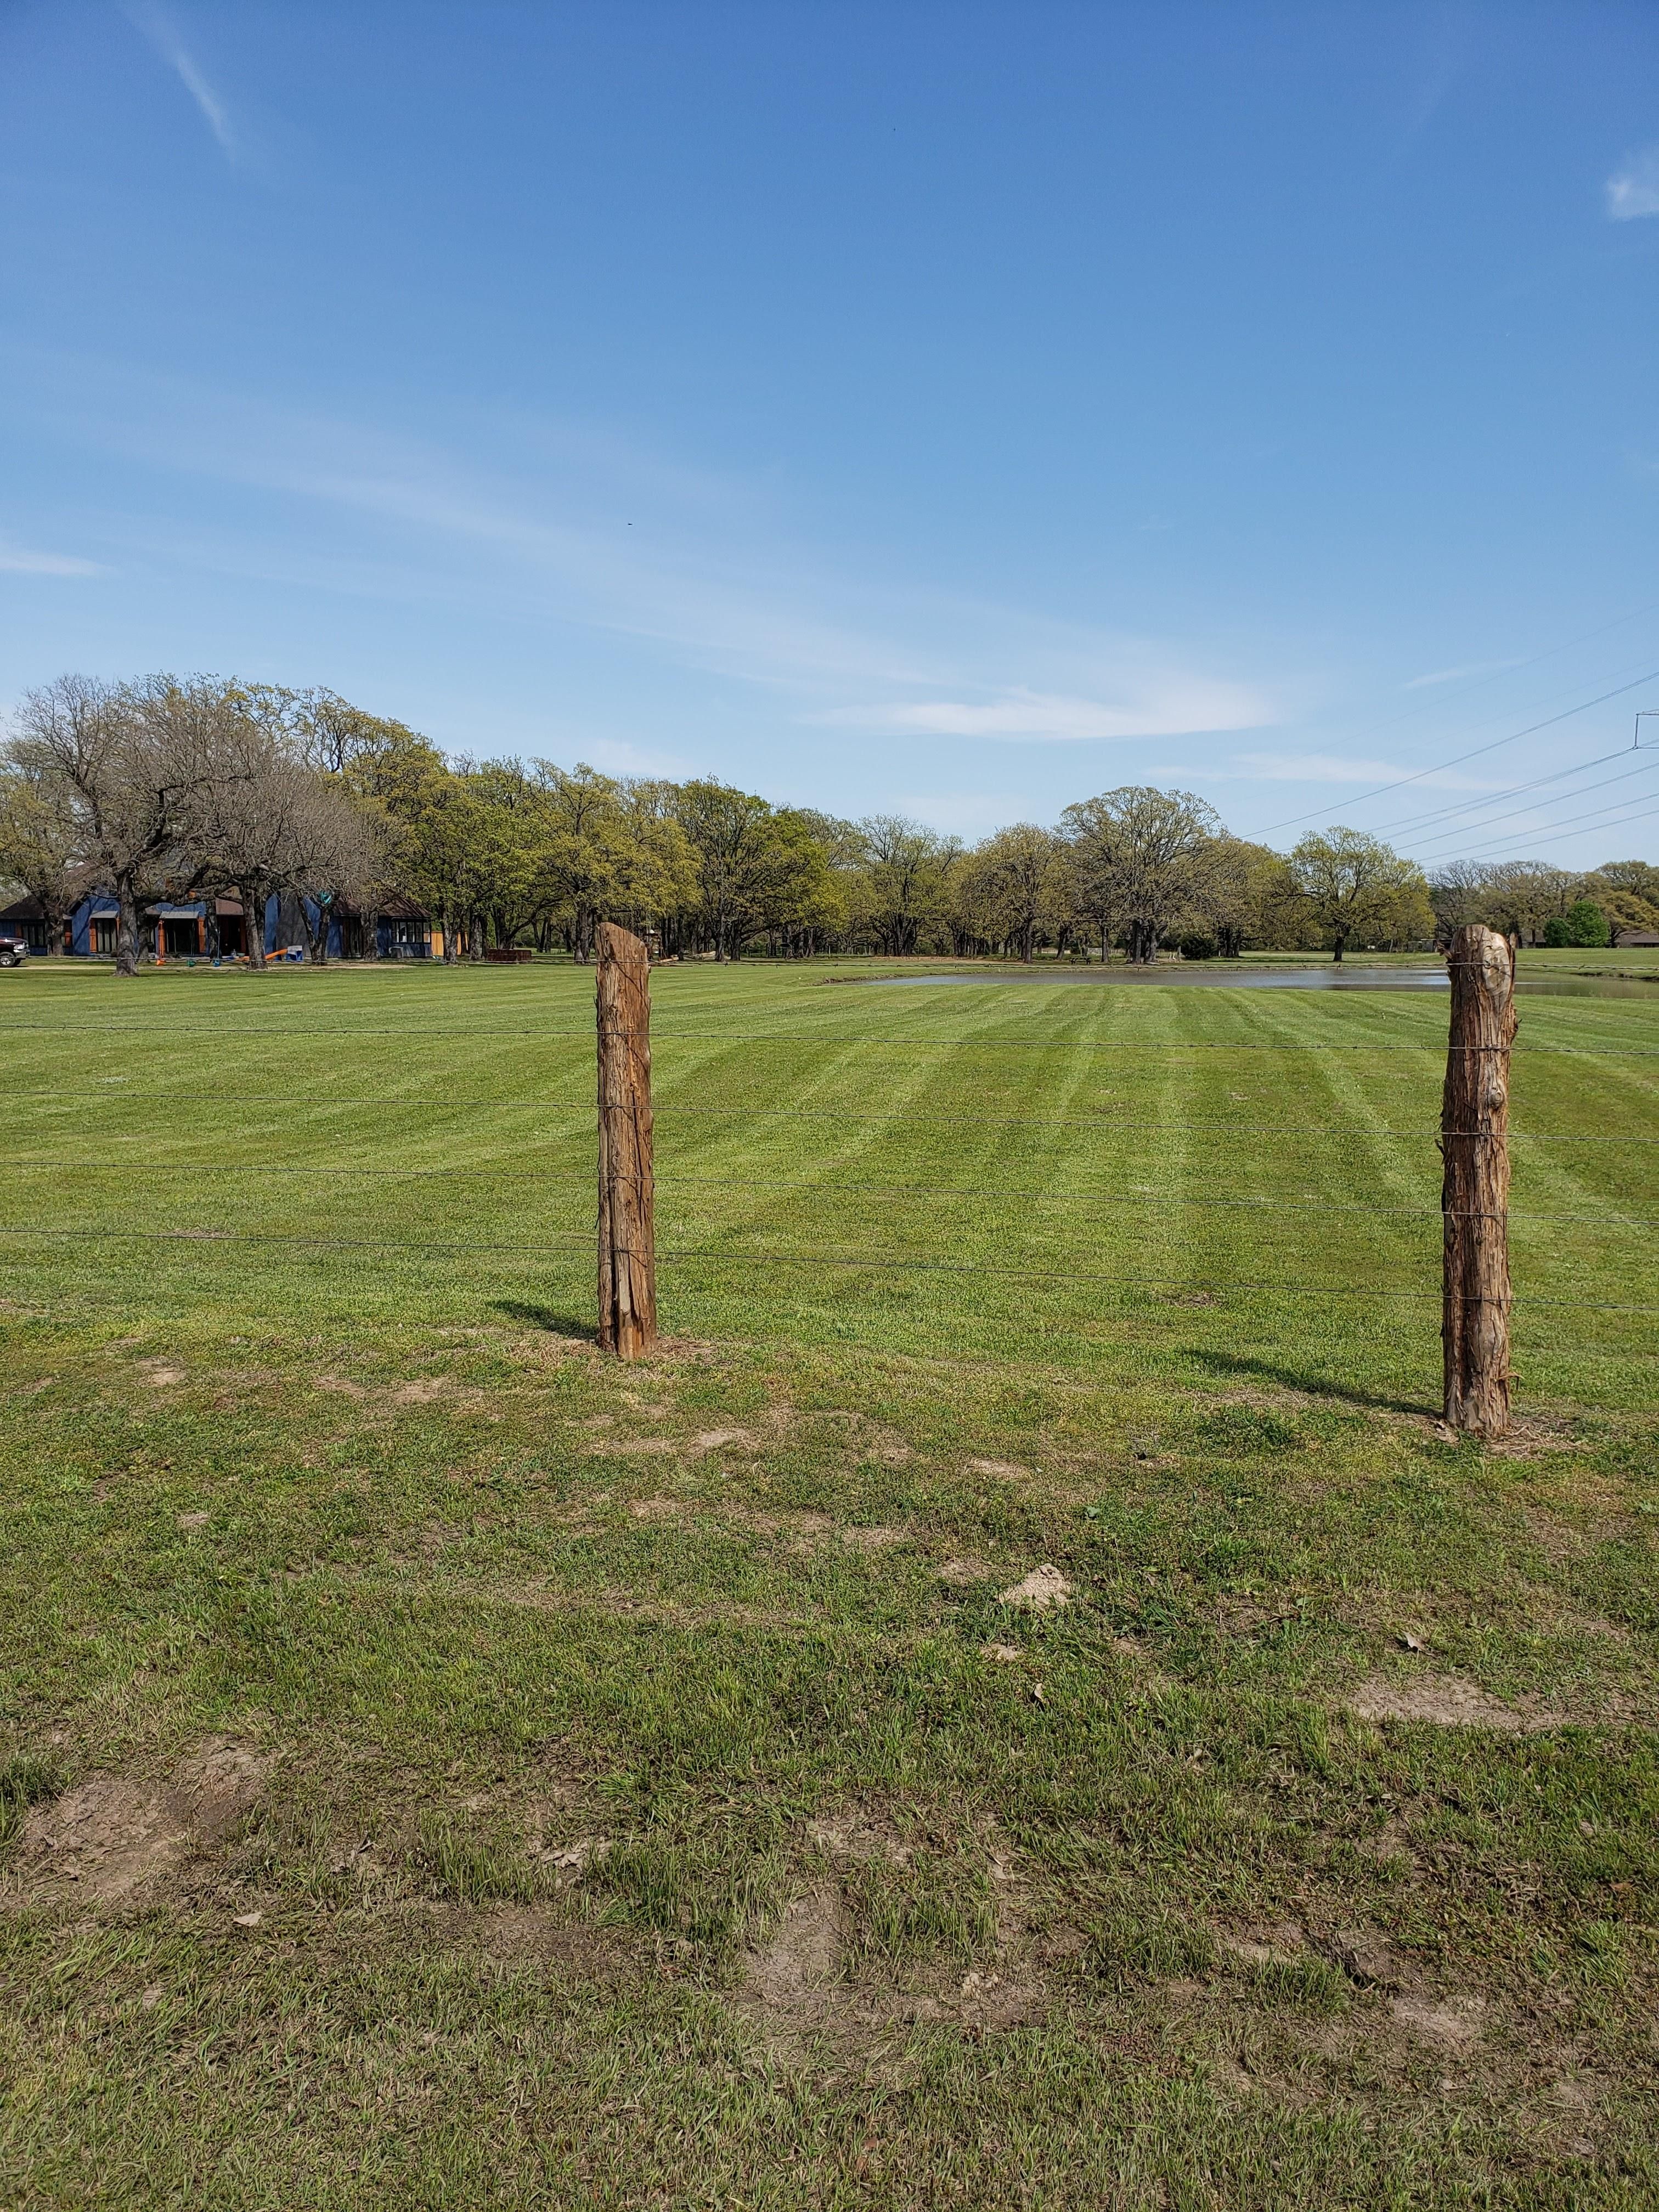 All Photos for Ornelas Lawn Service in Lone Oak, Texas